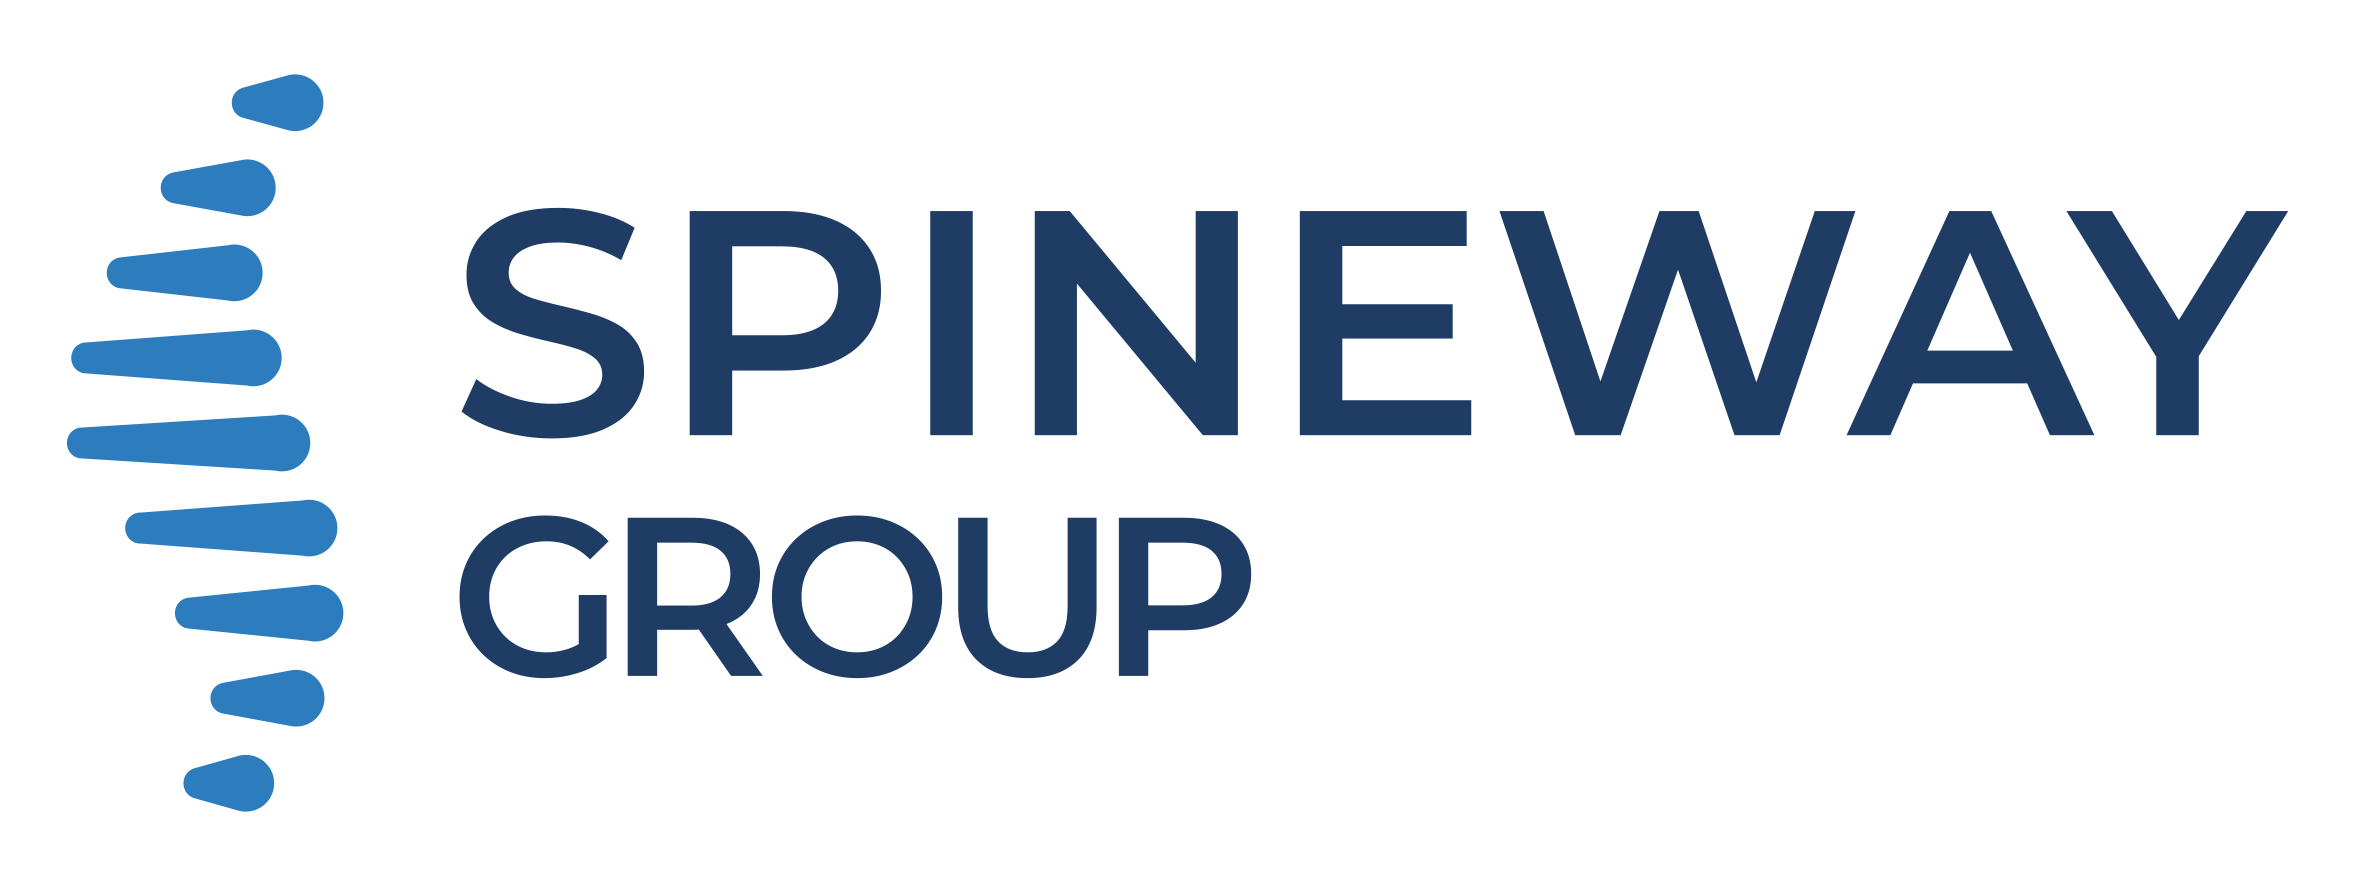 SPINEWAY GROUP logo 2 bleus RVB.png